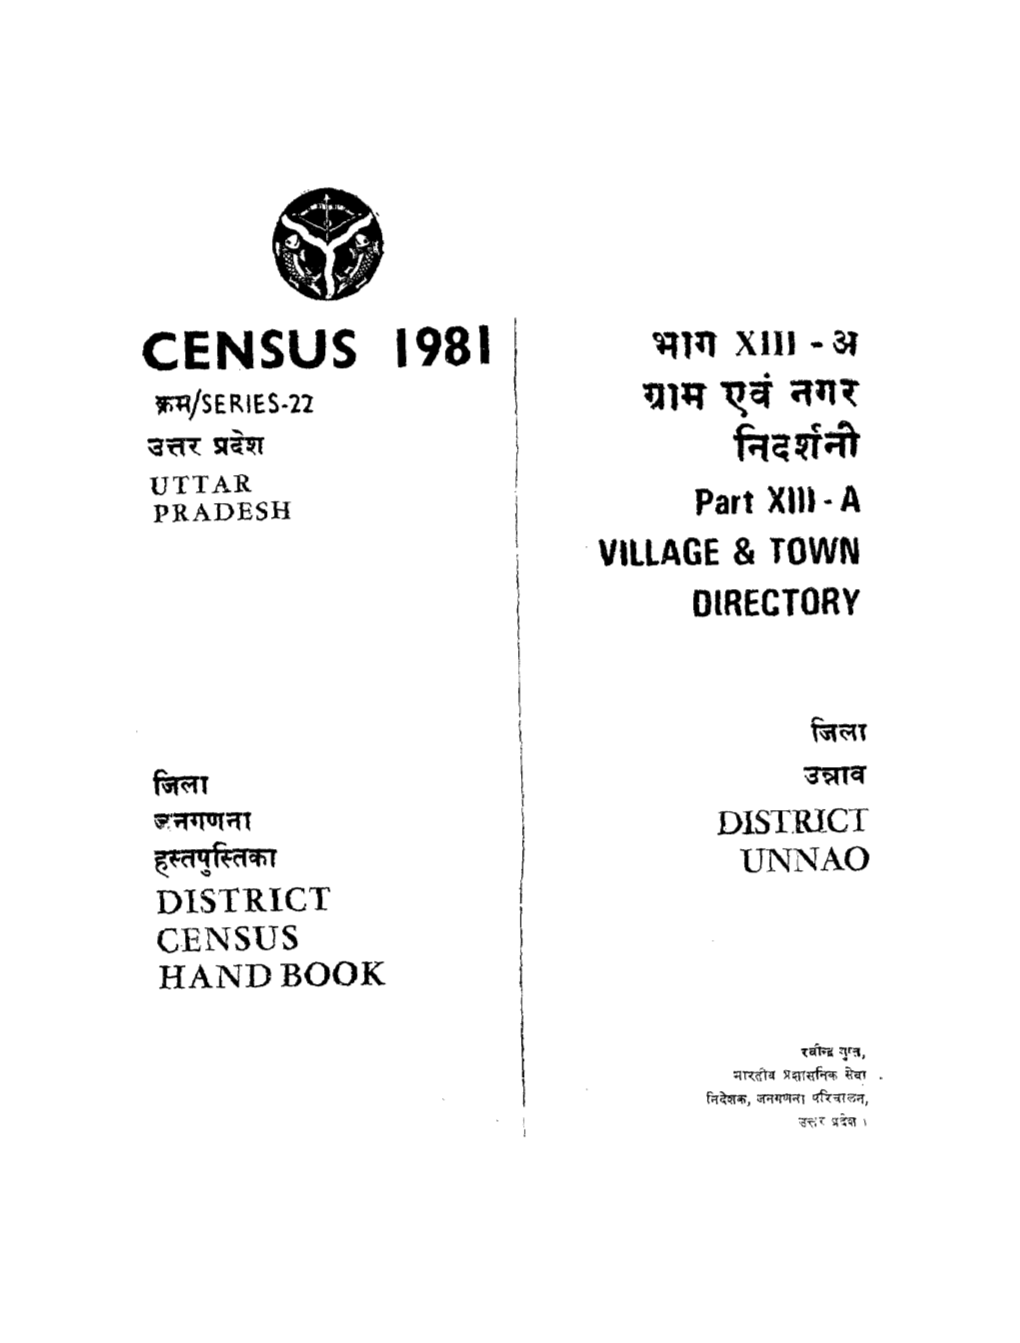 District Census Handbook, Unnao, Part XIII-A, Series-22, Uttar Pradesh